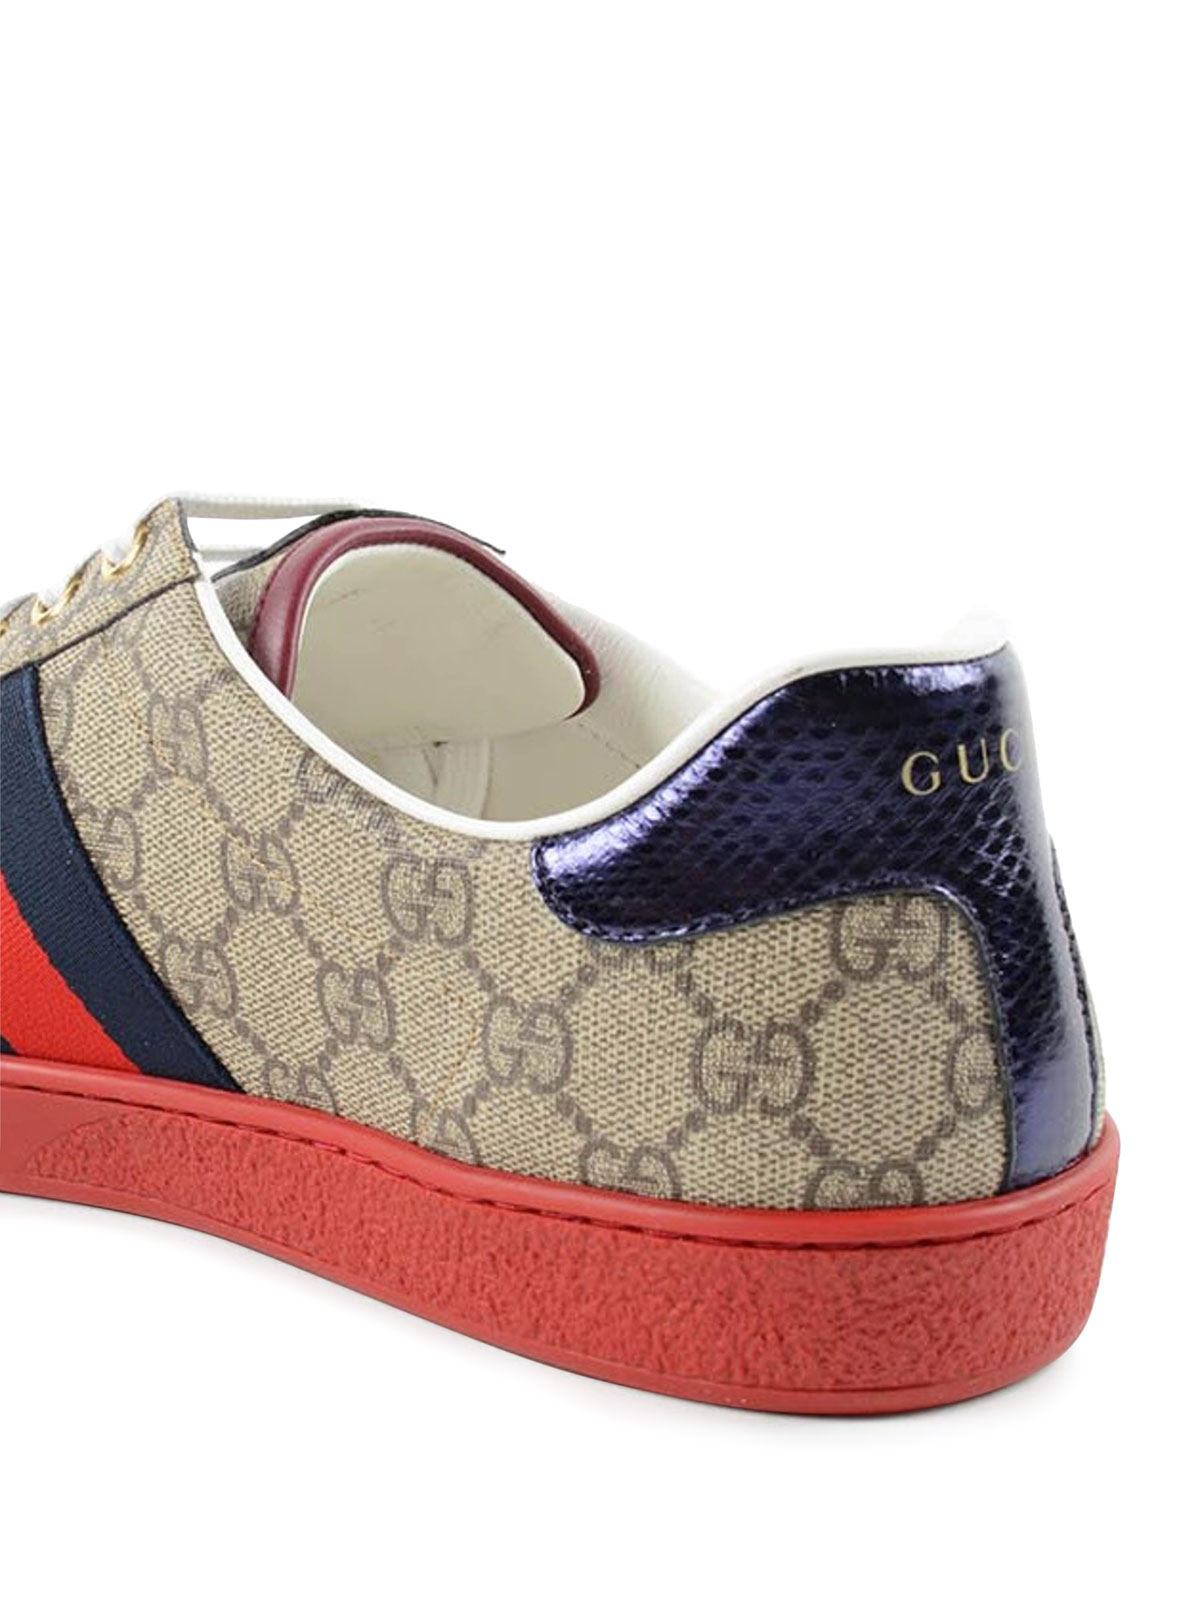 Gucci - GG Supreme sneakers - trainers - 429445/K2LH0 9767 | www.waldenwongart.com